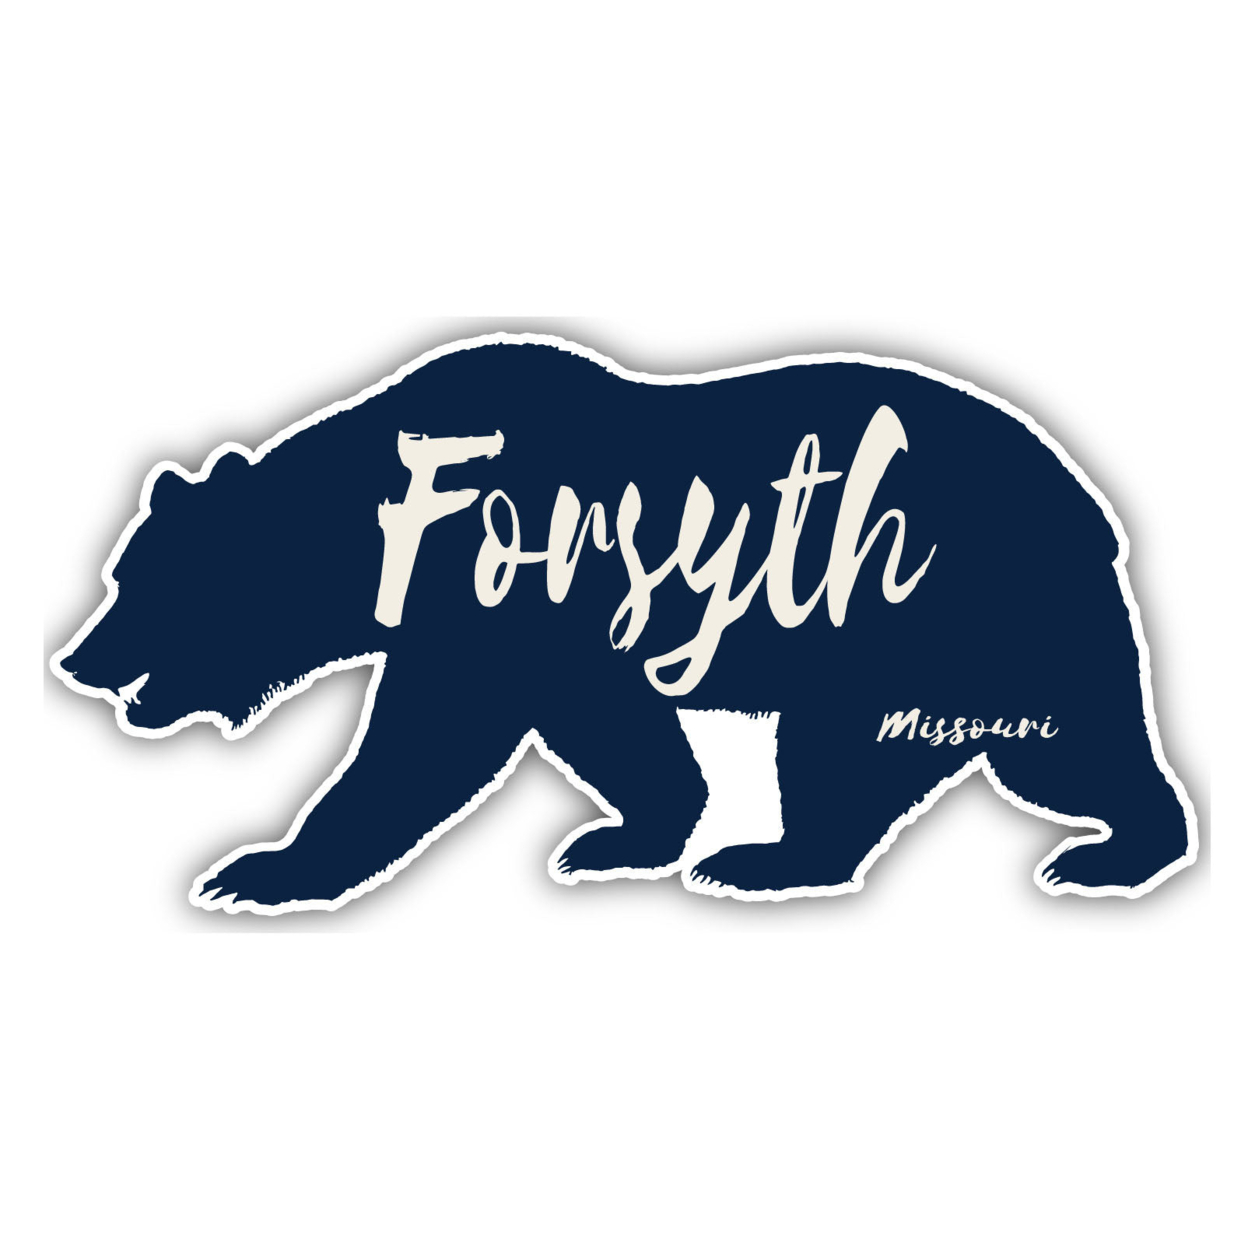 Forsyth Missouri Souvenir Decorative Stickers (Choose Theme And Size) - 4-Pack, 6-Inch, Bear